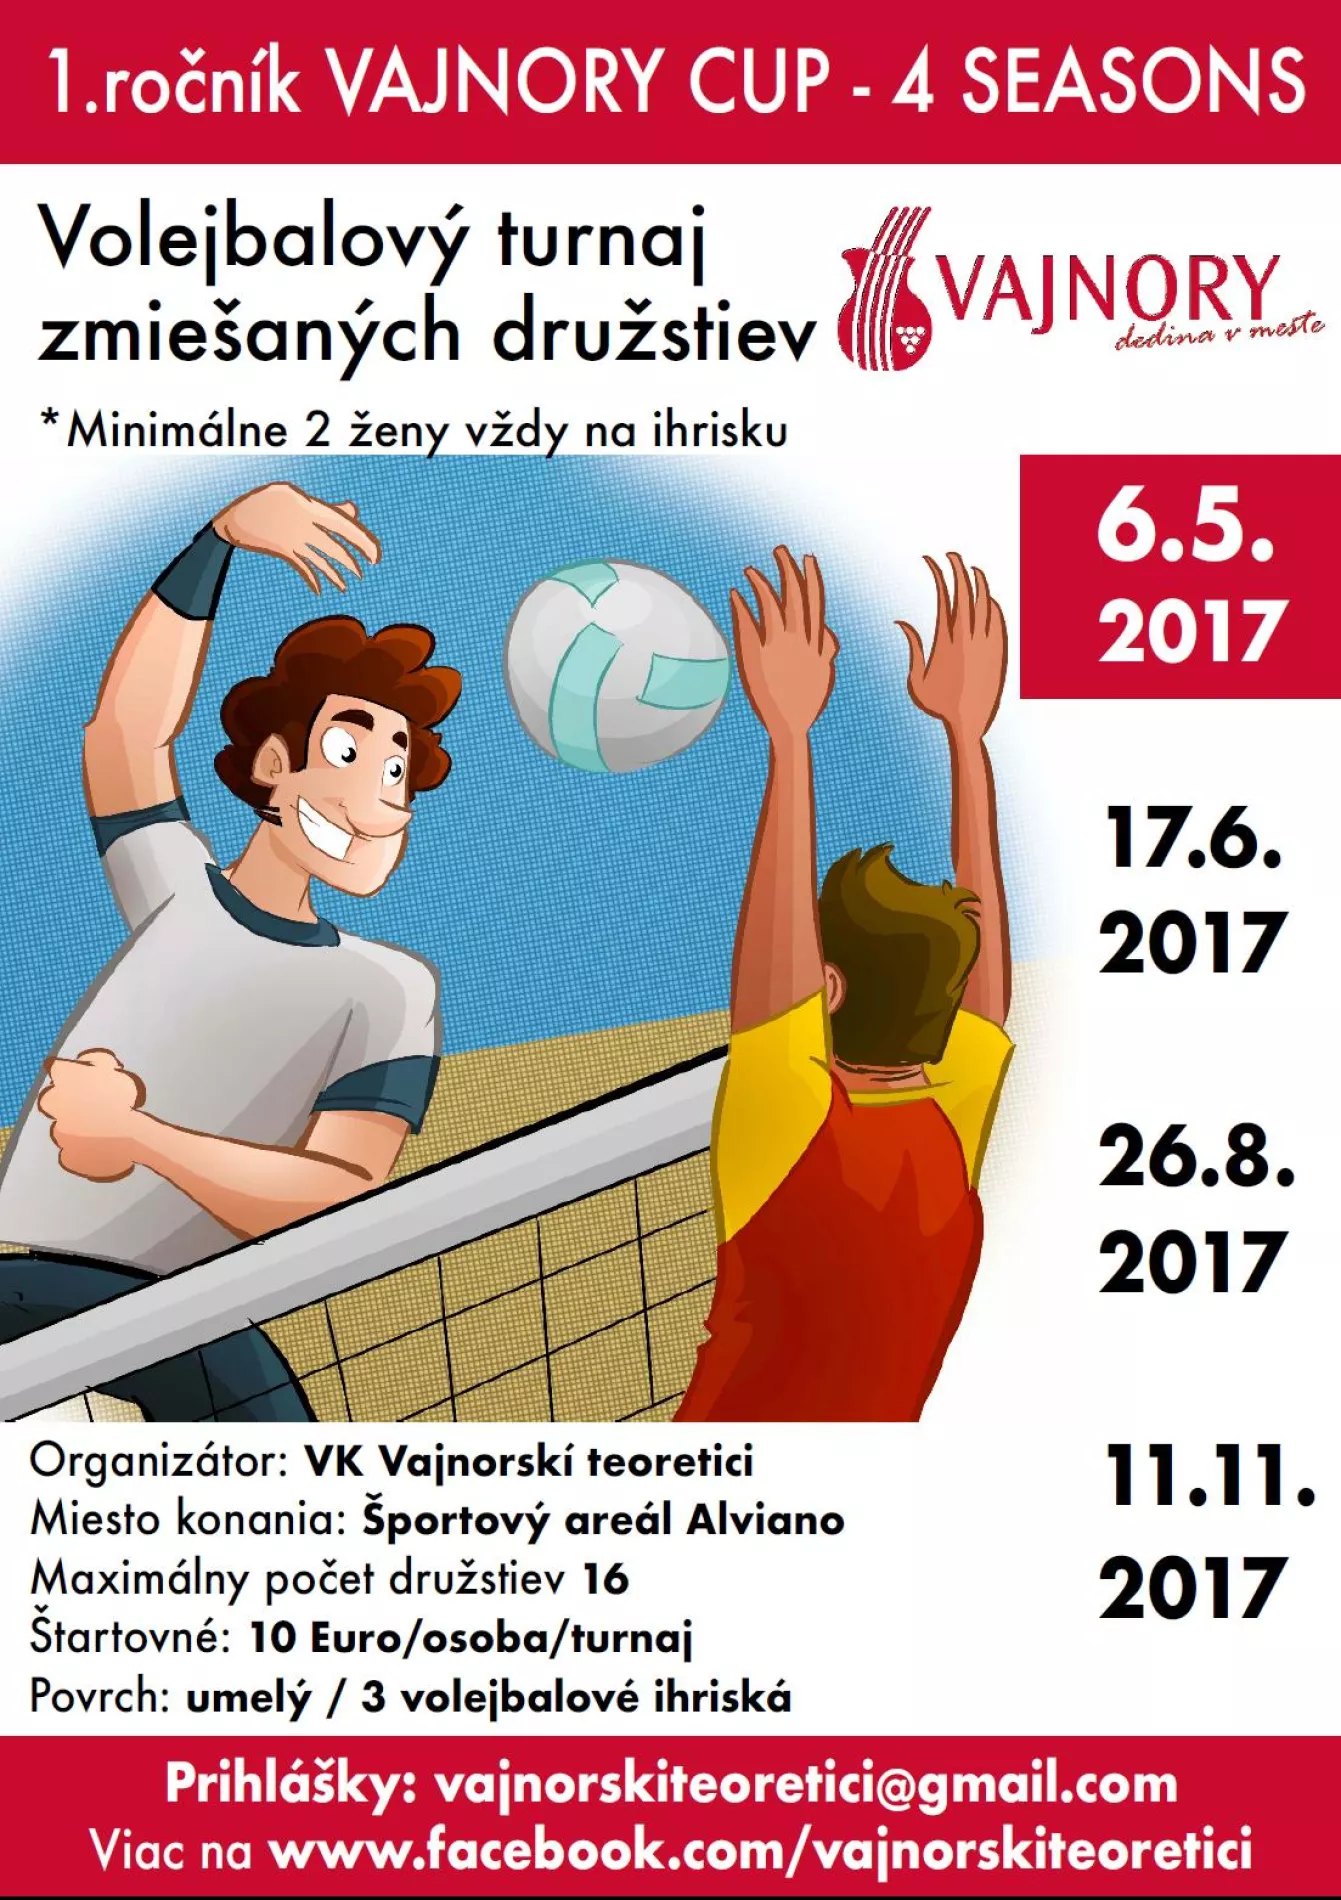 Vajnory cup – 4 SEASONS 6.5.2017